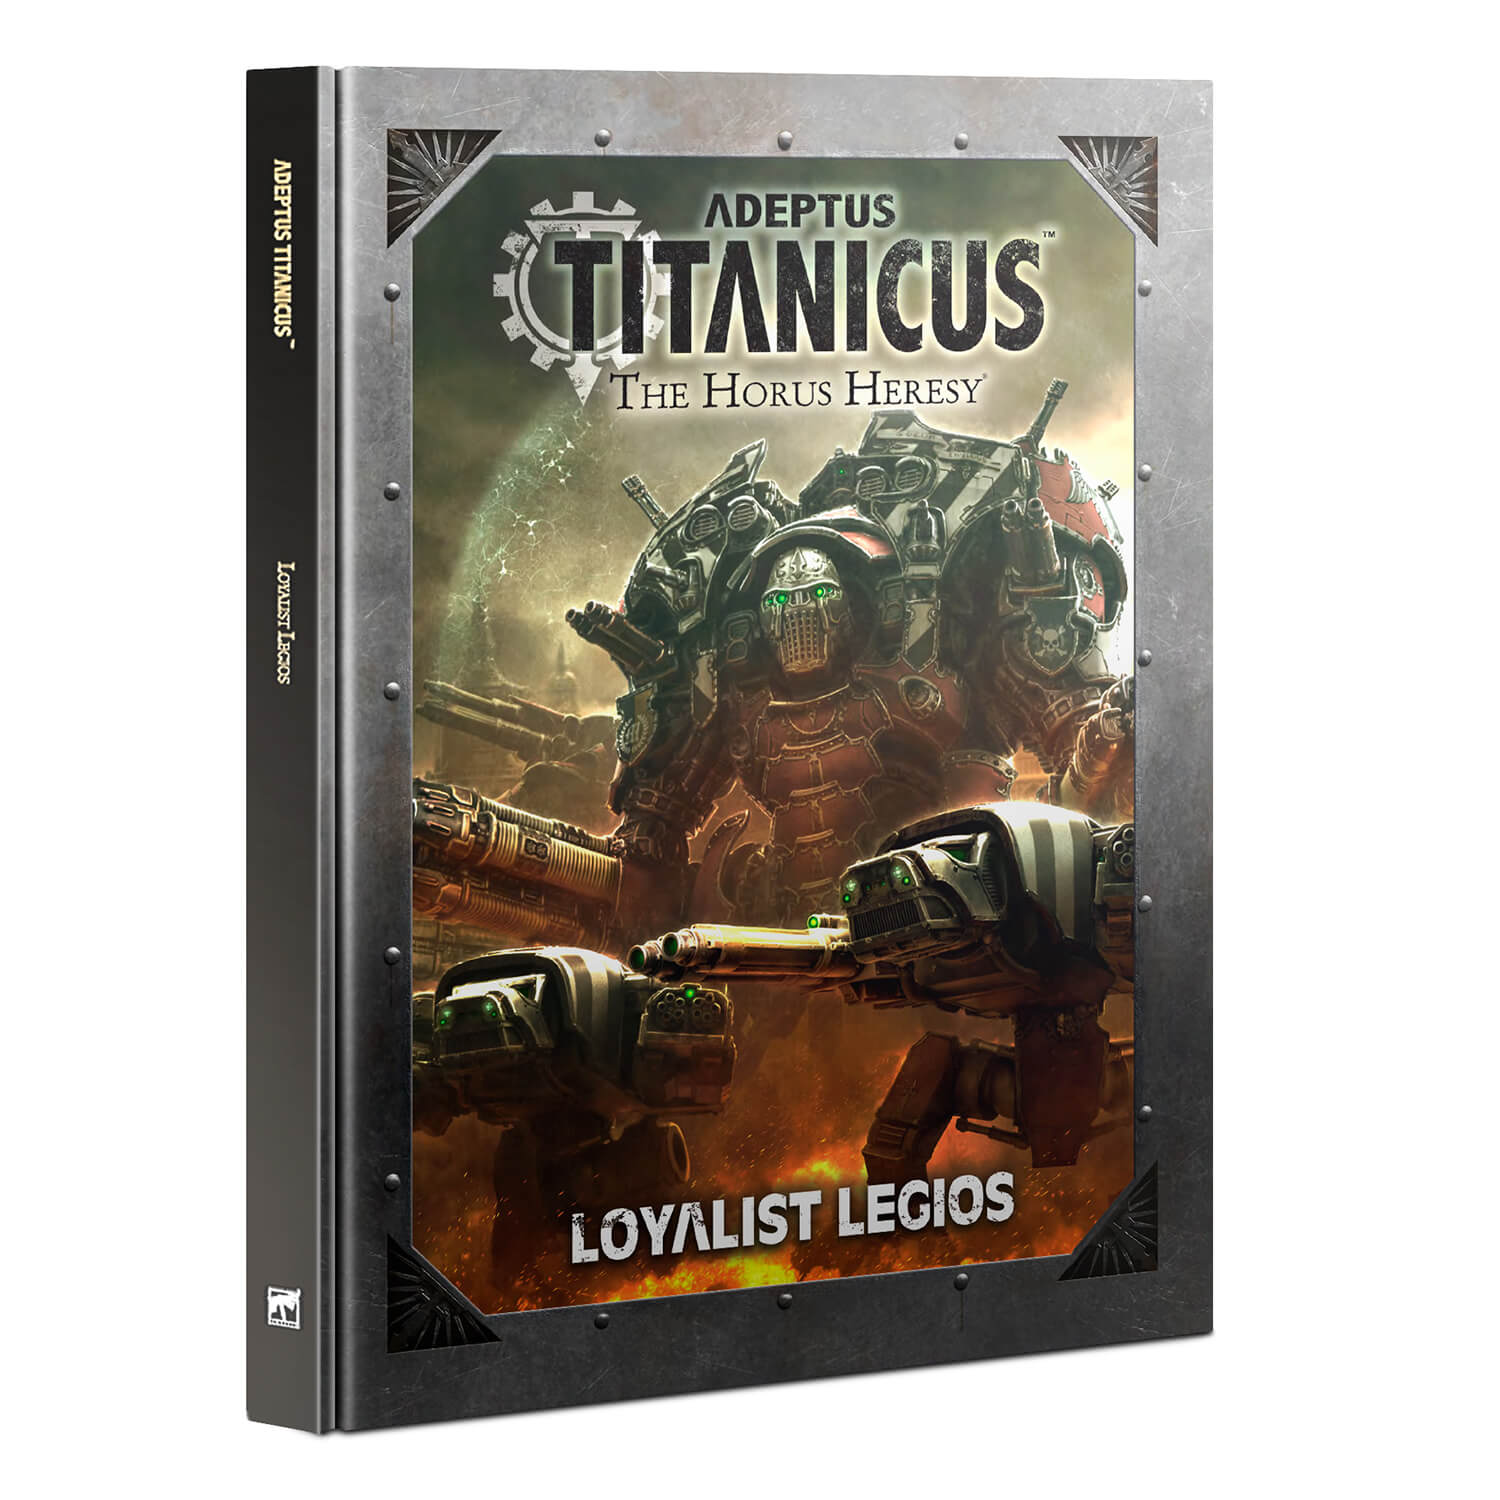 Adeptus Titanicus: The Horus Heresy, Loyalist Legios